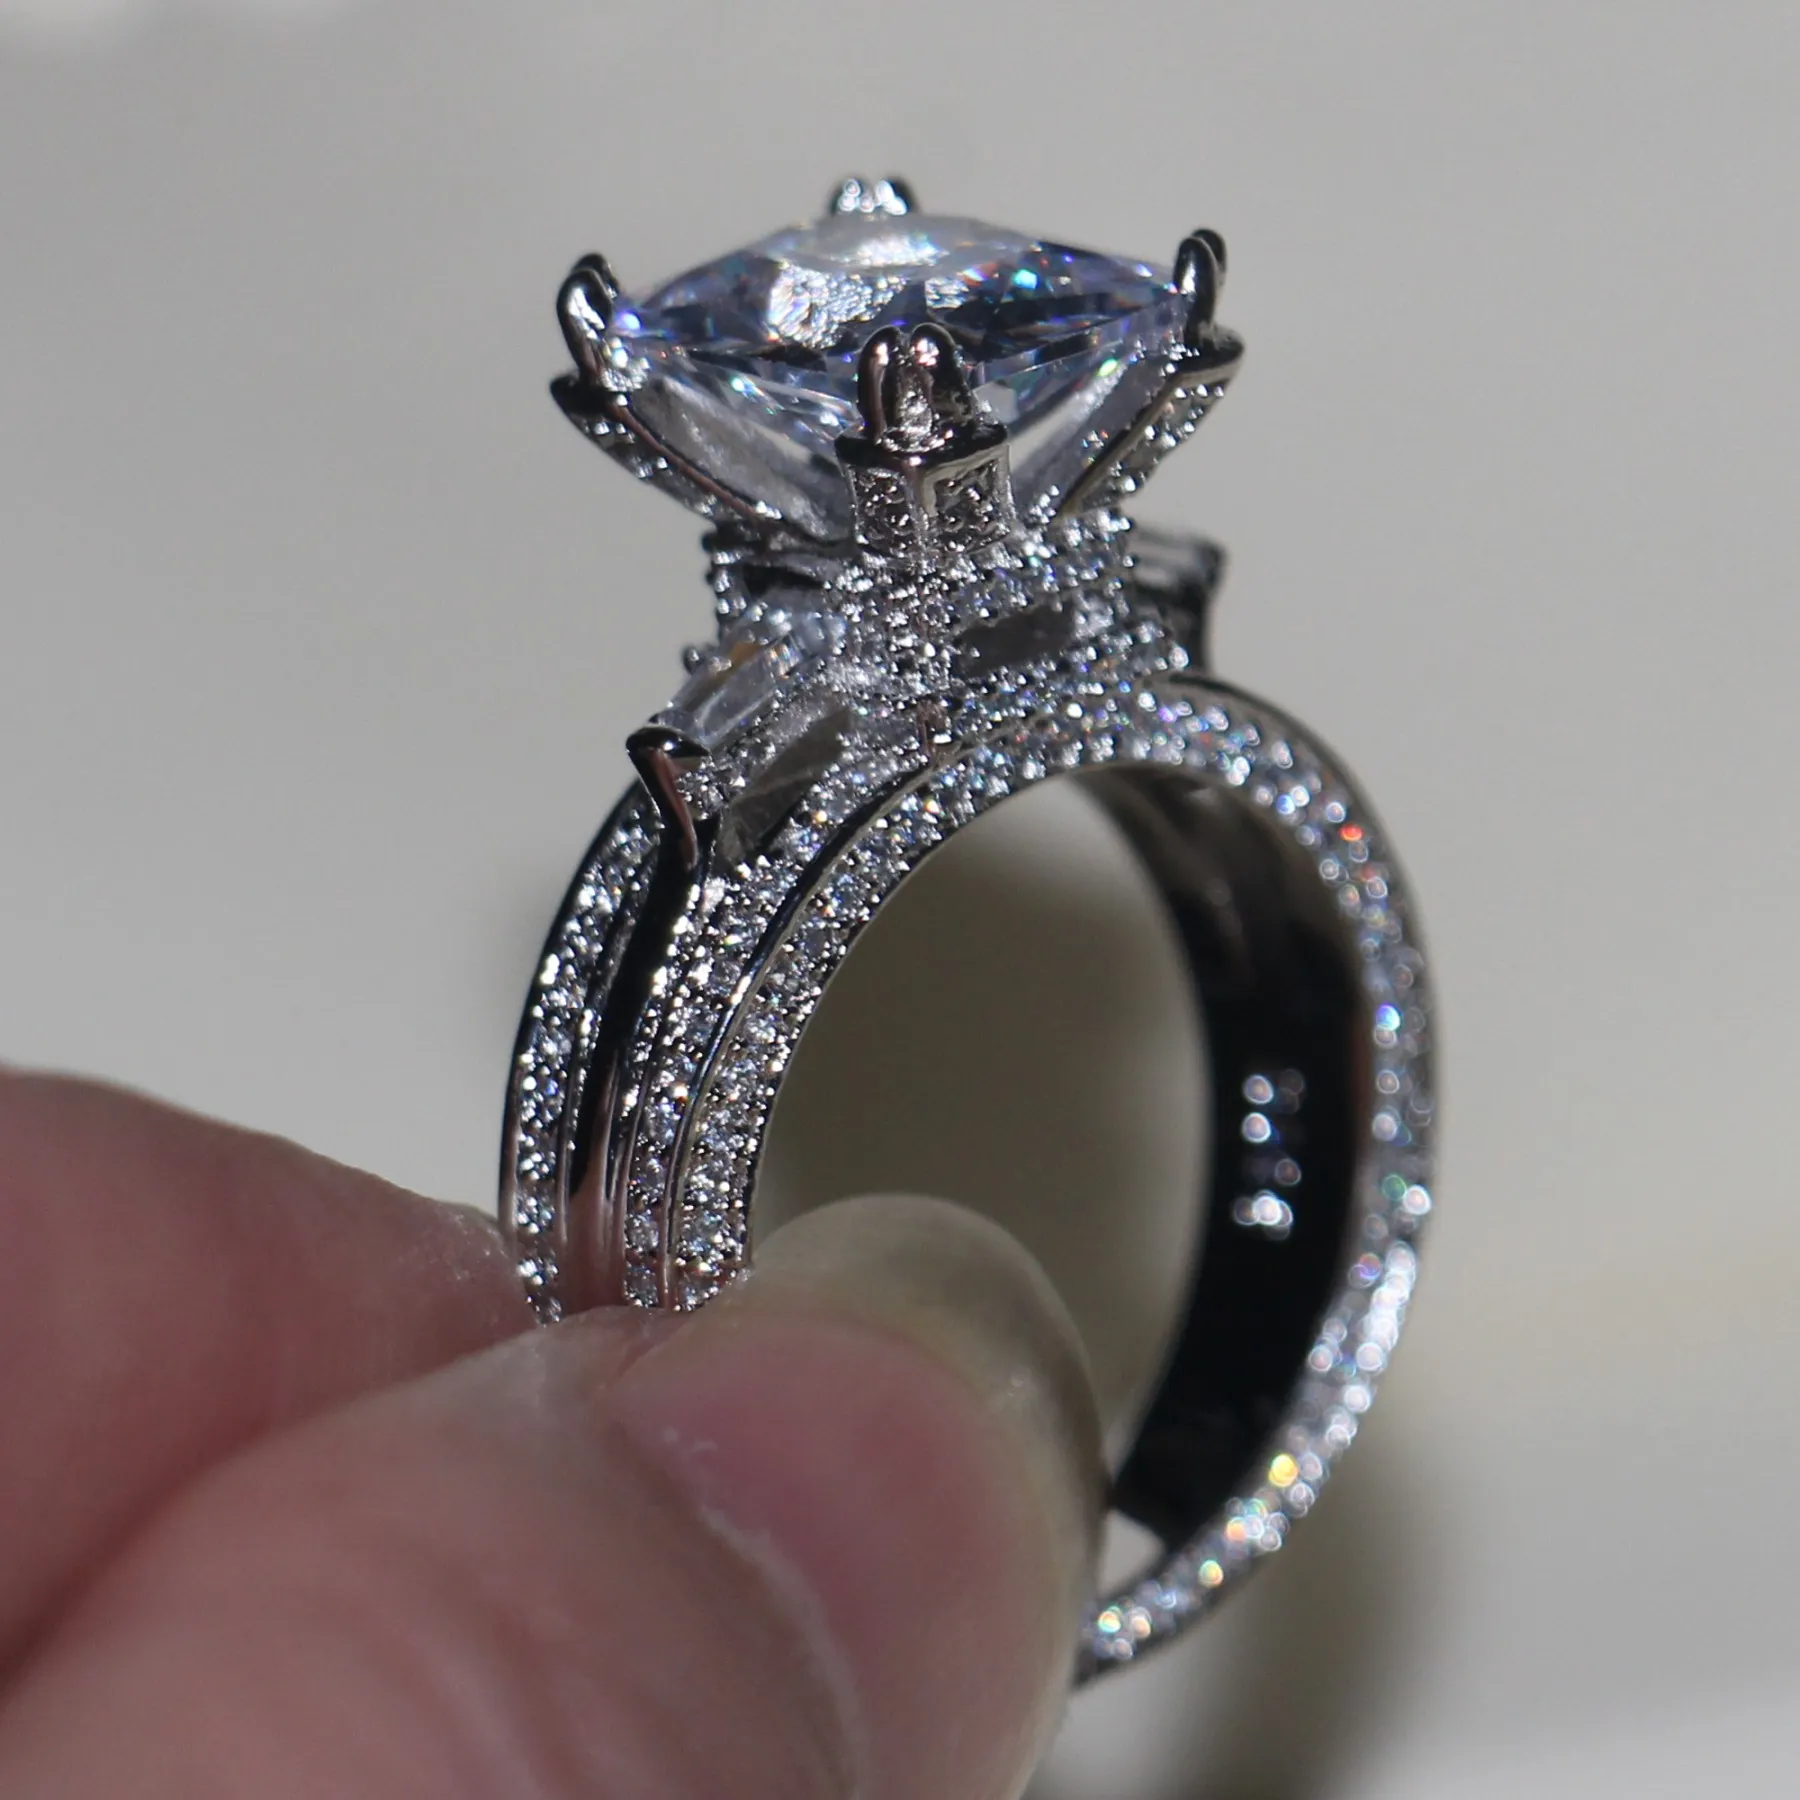 Vecalon mulheres grandes jóias anel princesa corte 10ct pedra de diamante cz 925 esterlina prata noivado casamento anel presente